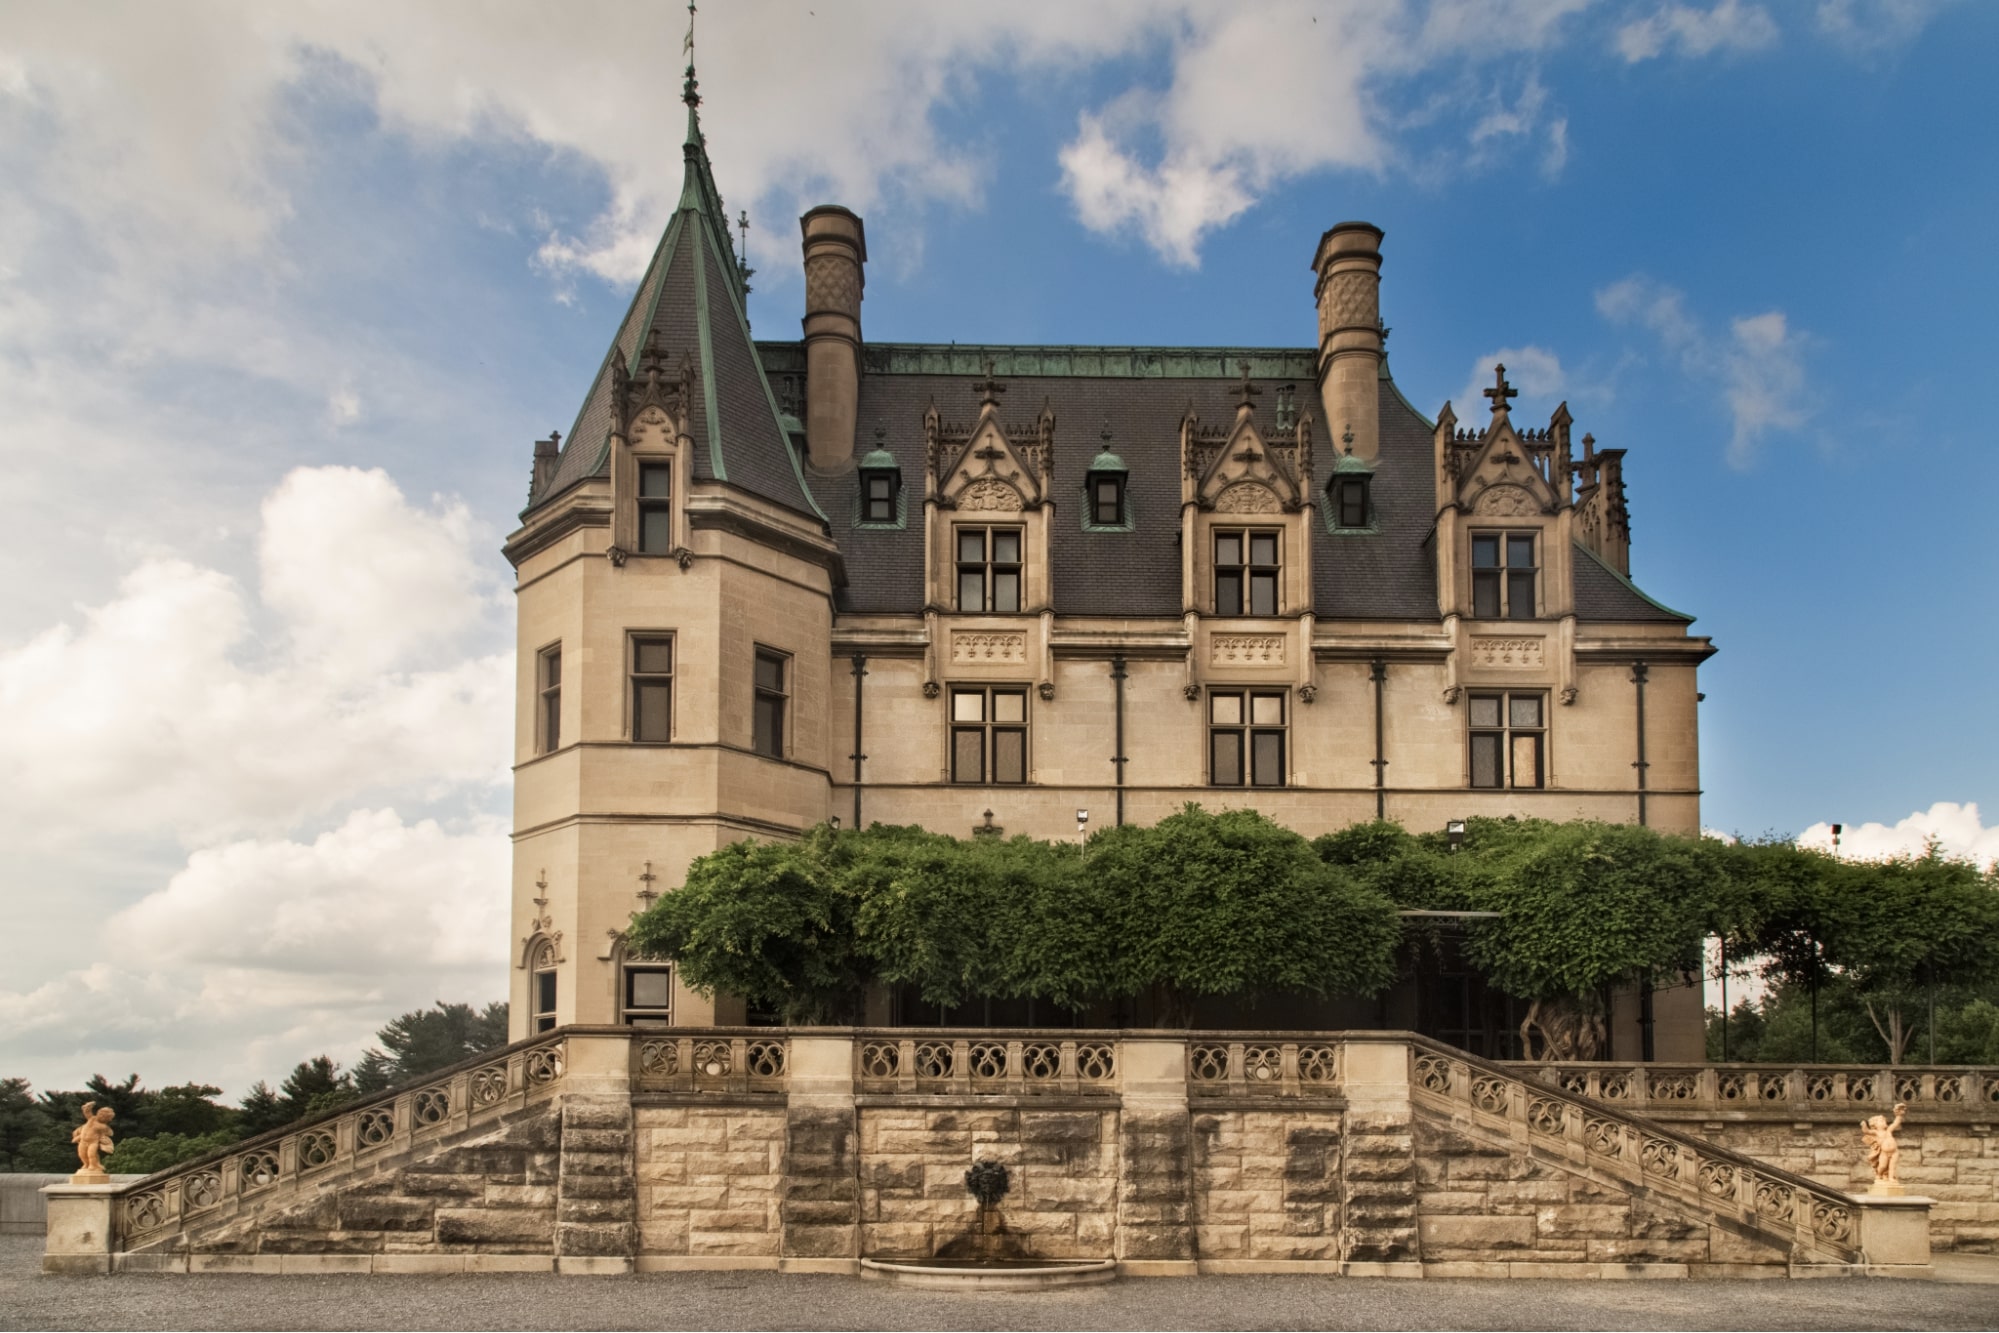 The History Behind the Biltmore Estate & Vanderbilt Family